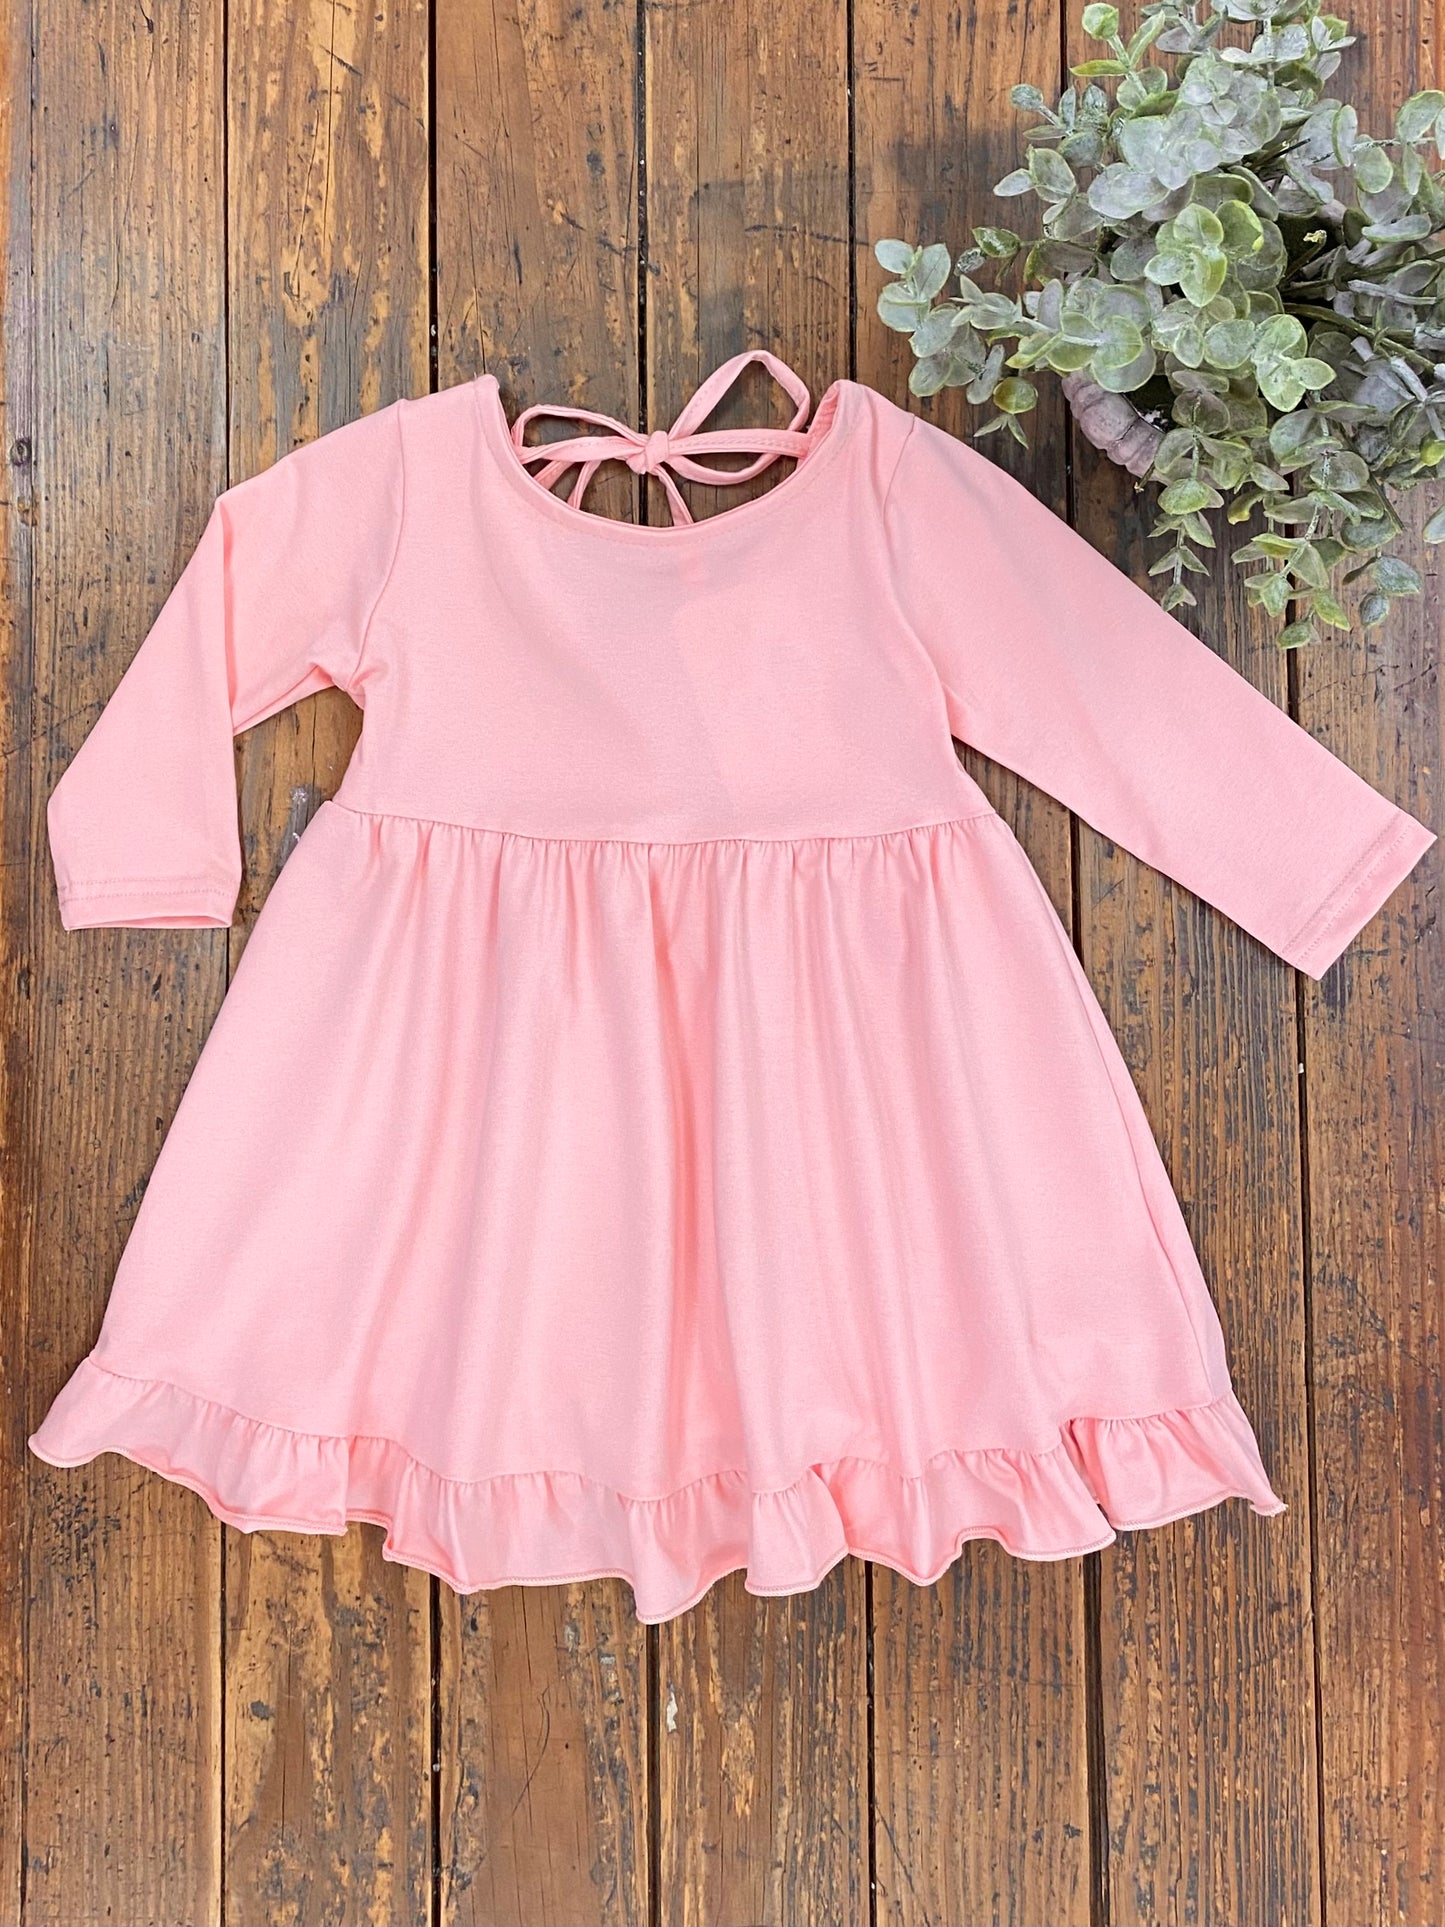 Pink Ruffle Girl Dress